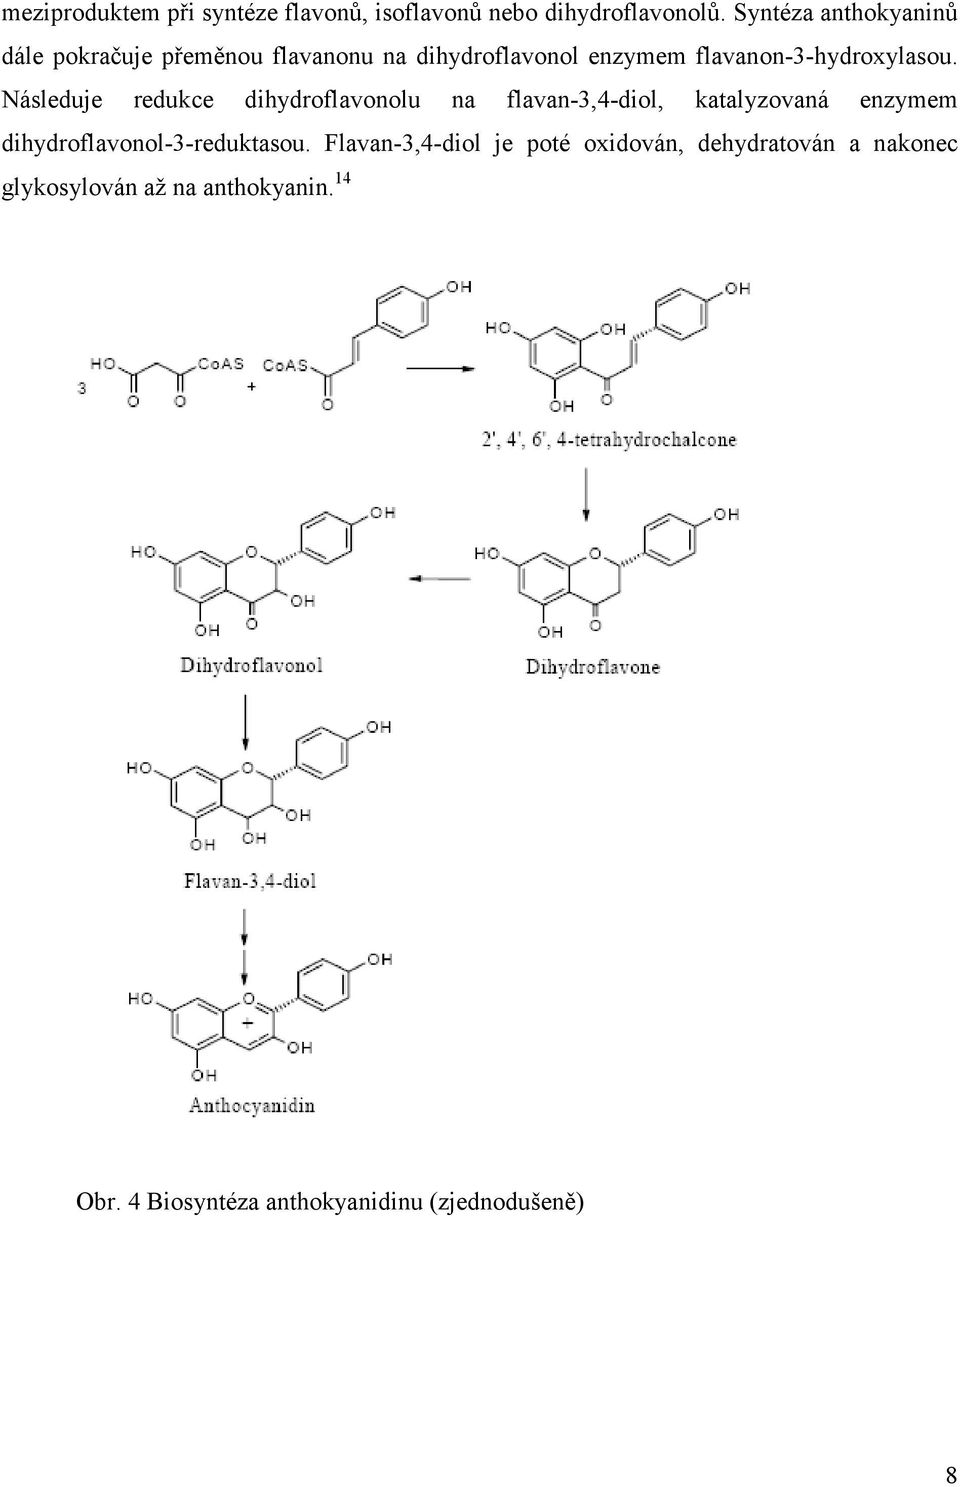 Následuje redukce dihydroflavonolu na flavan-3,4-diol, katalyzovaná enzymem dihydroflavonol-3-reduktasou.